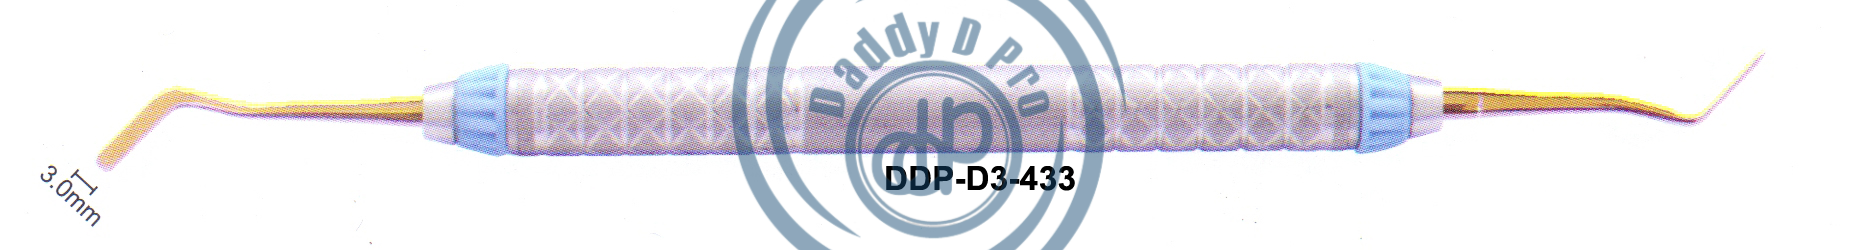 images/DDP-D3-433.png